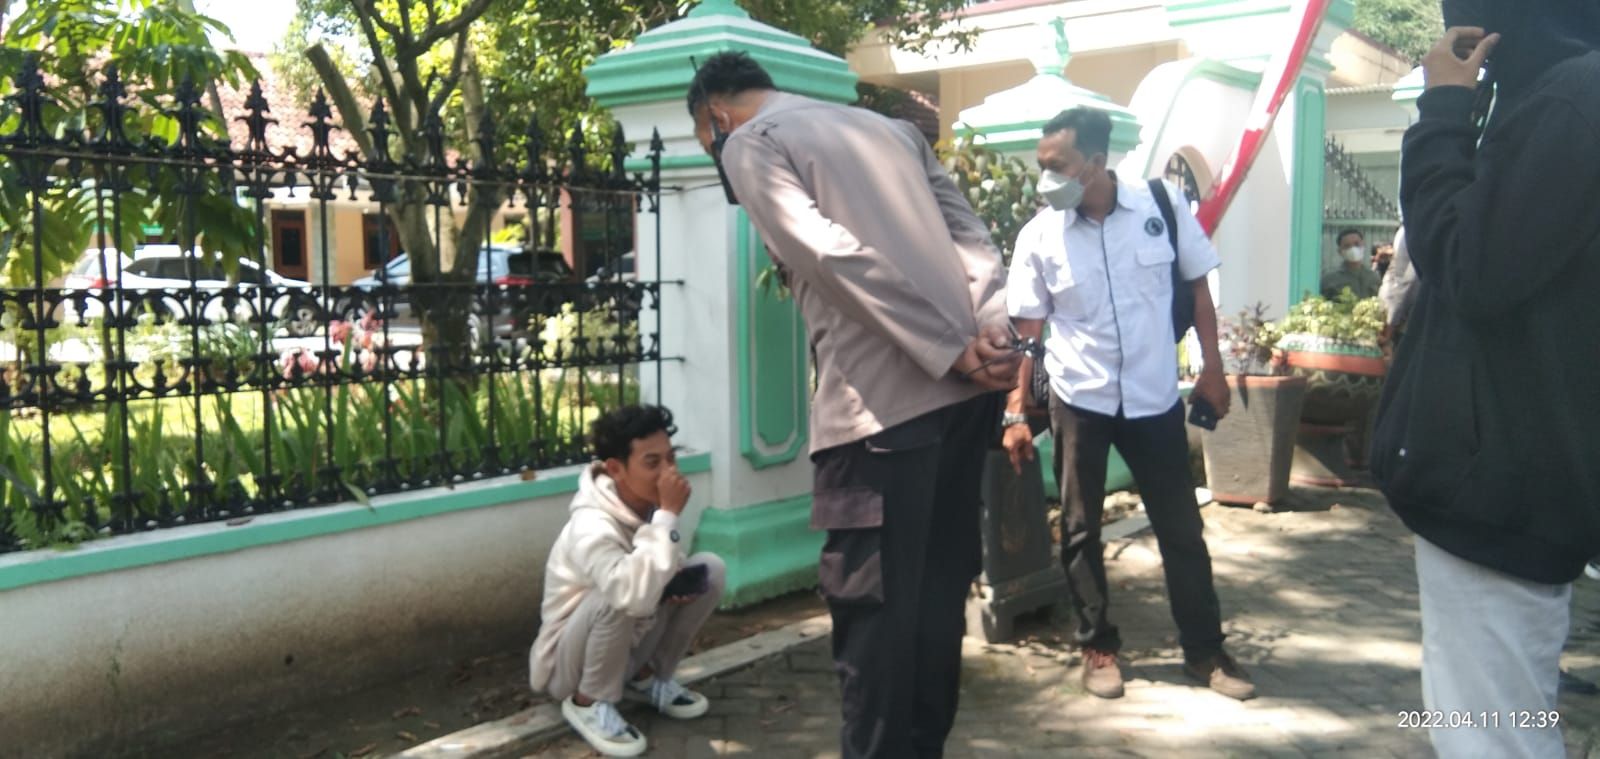 Kapolsek Kota Purwodadi, AKP Saptono WIdyo Hariyanto menegur mahasiswa yang kedapatan merokok saat aksi damai mahasiswa Grobogan di bulan puasa.